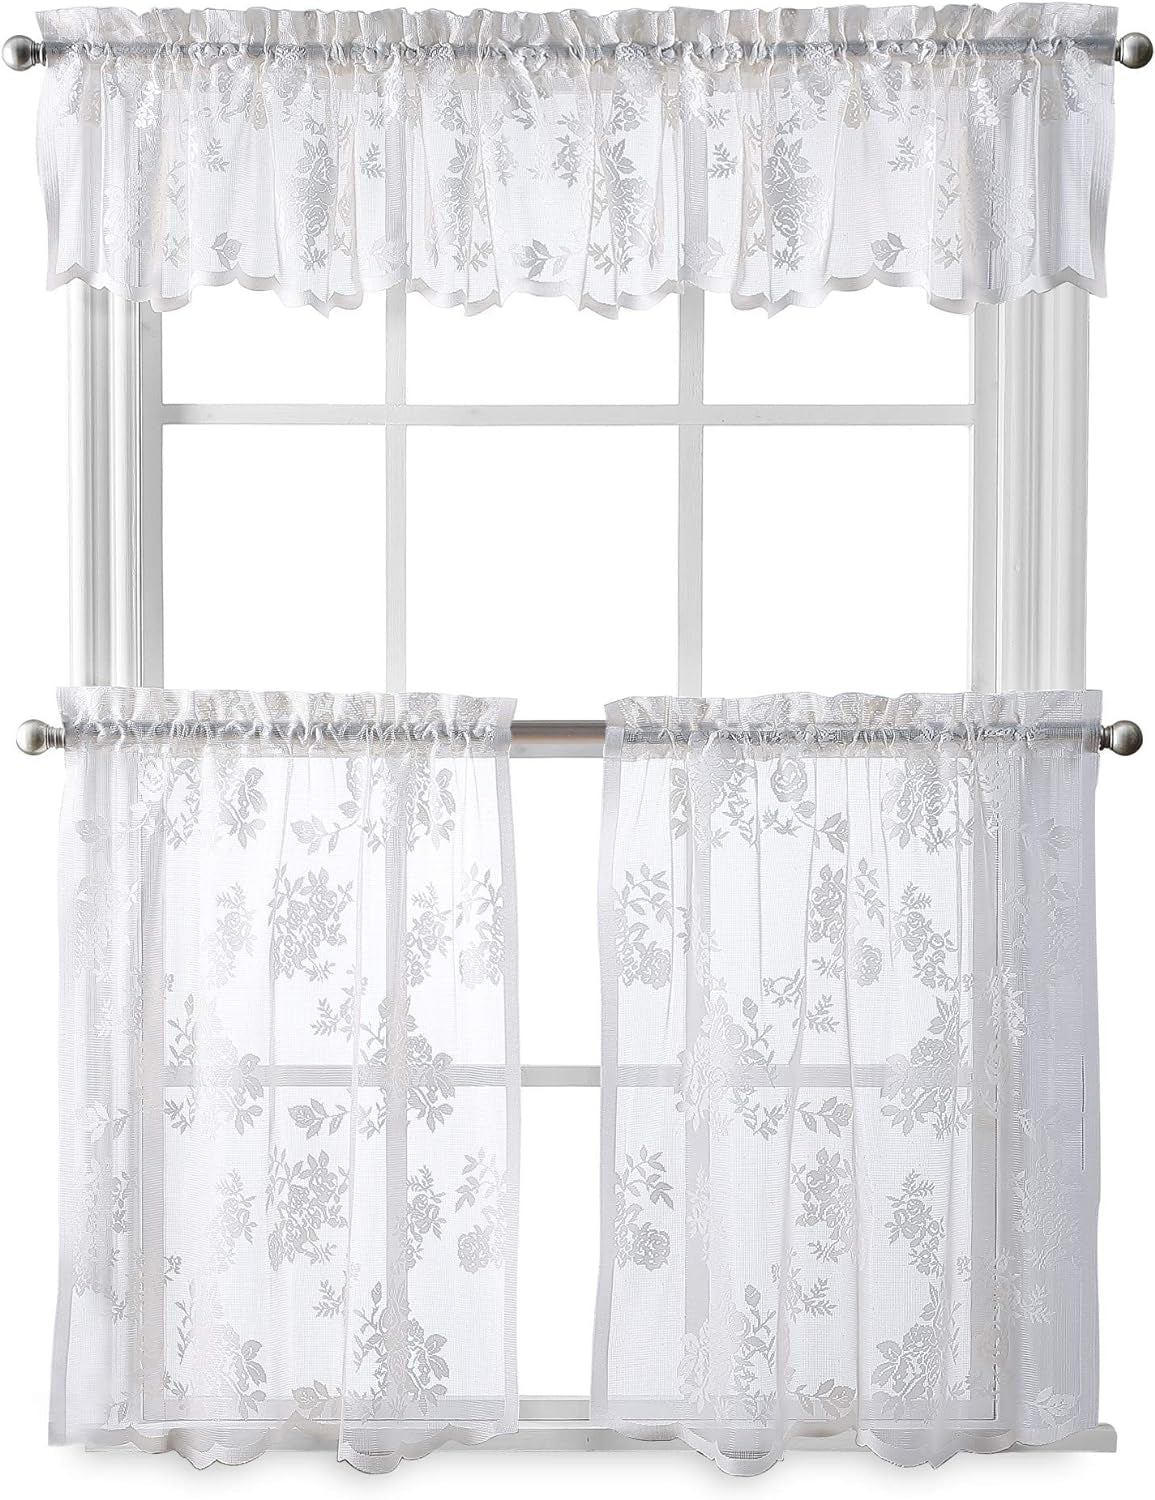 Curtainworks Sibella Lace Kitchen Curtain Window, Rod Pocket, 14 in Valance, White